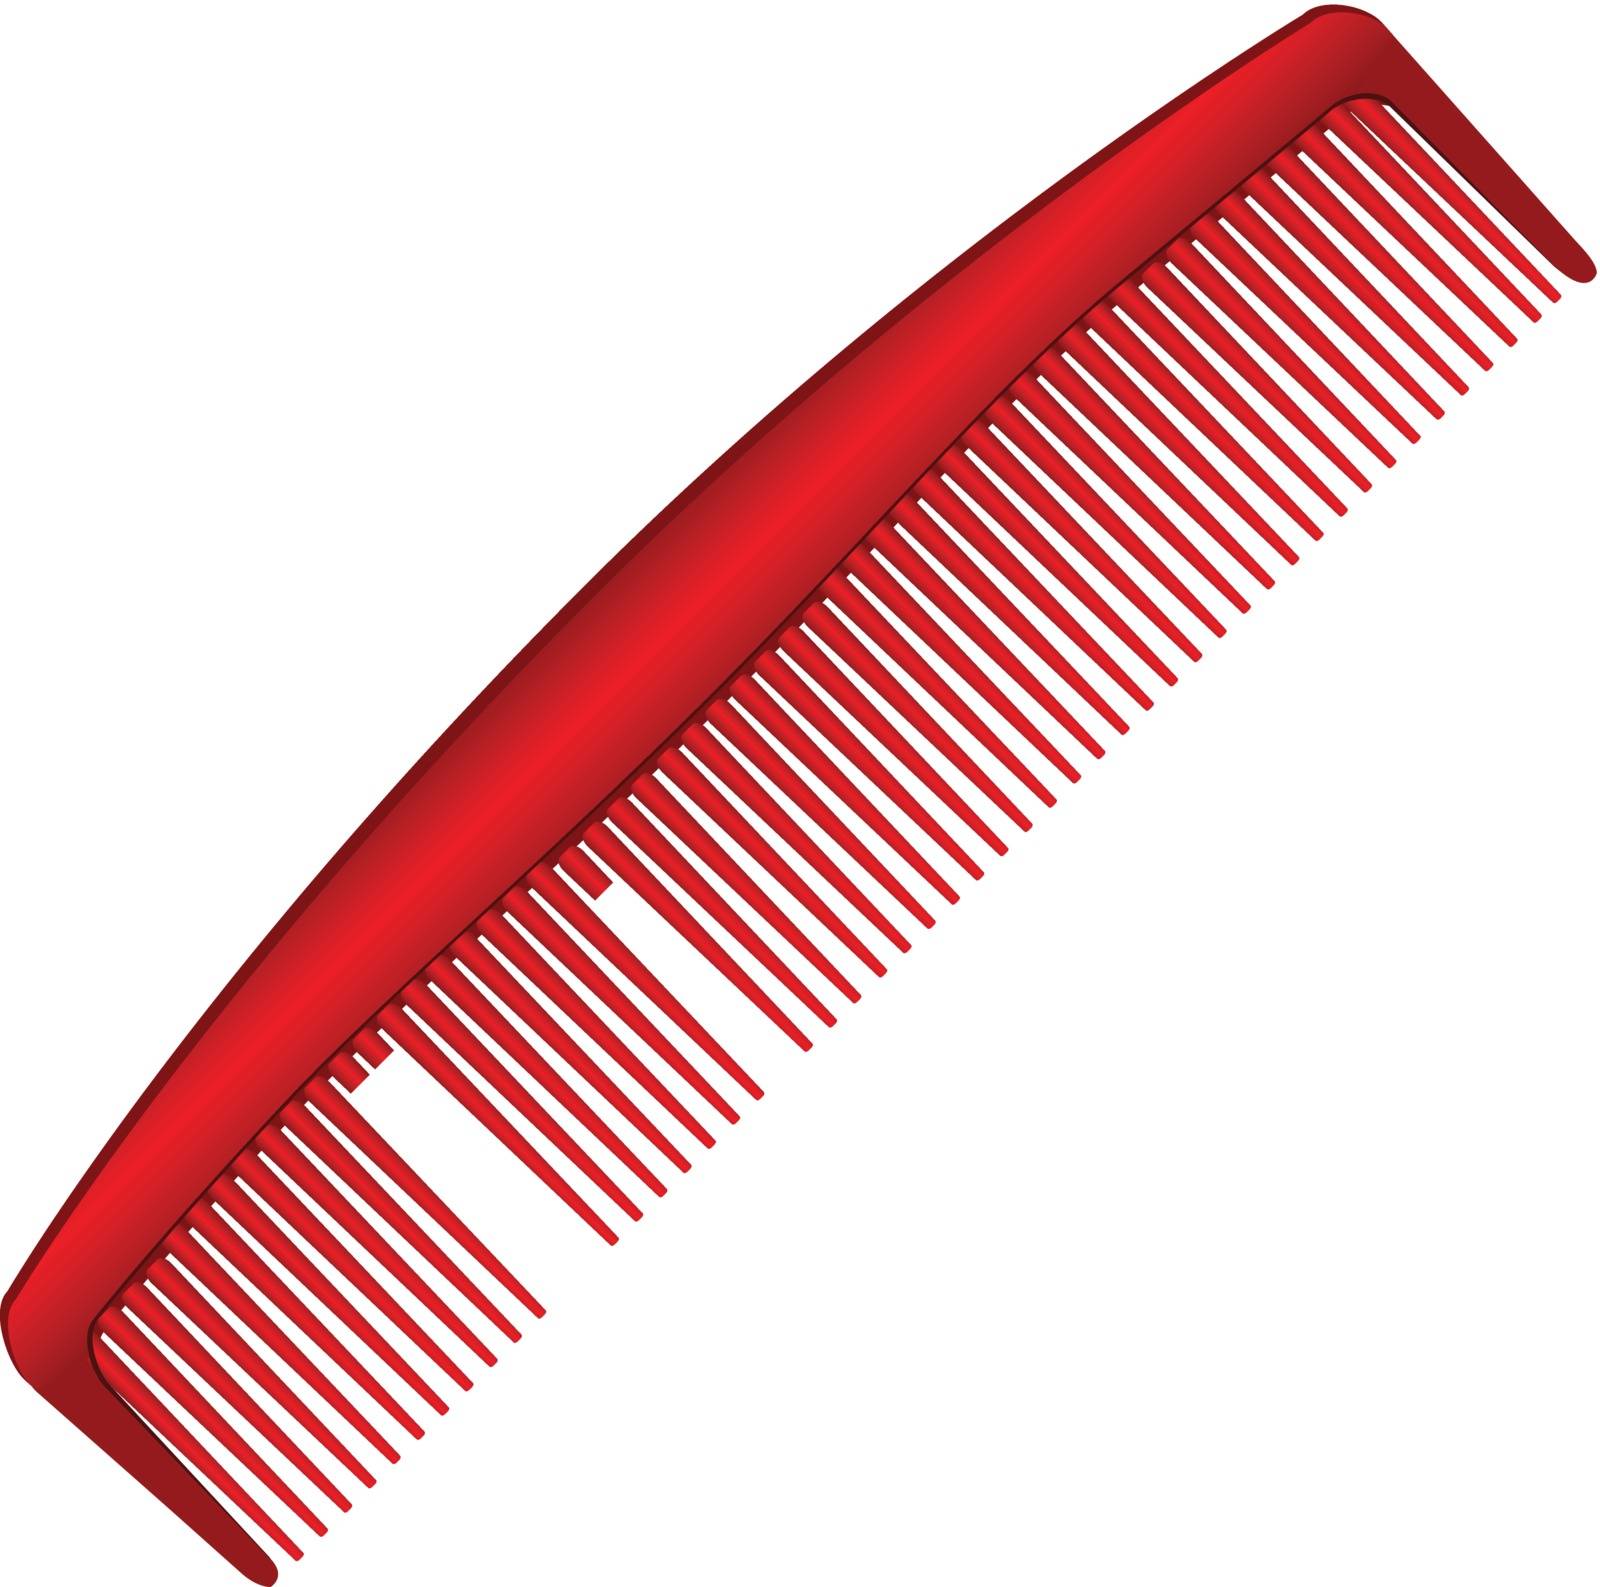 Broken men comb by VIPDesignUSA